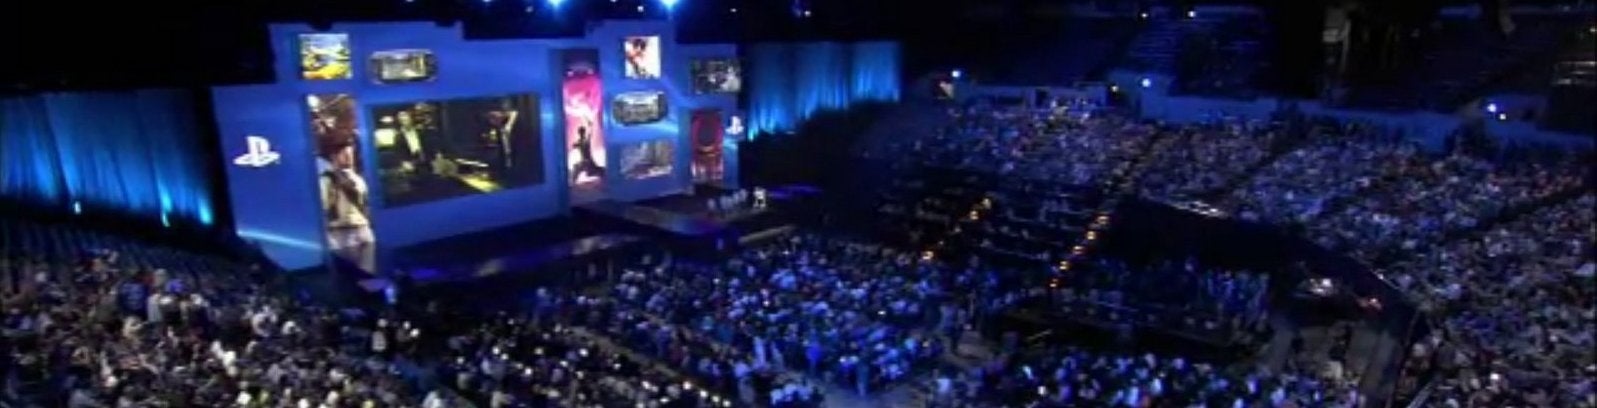 Imagen para E3 2014: Conferencia de Sony